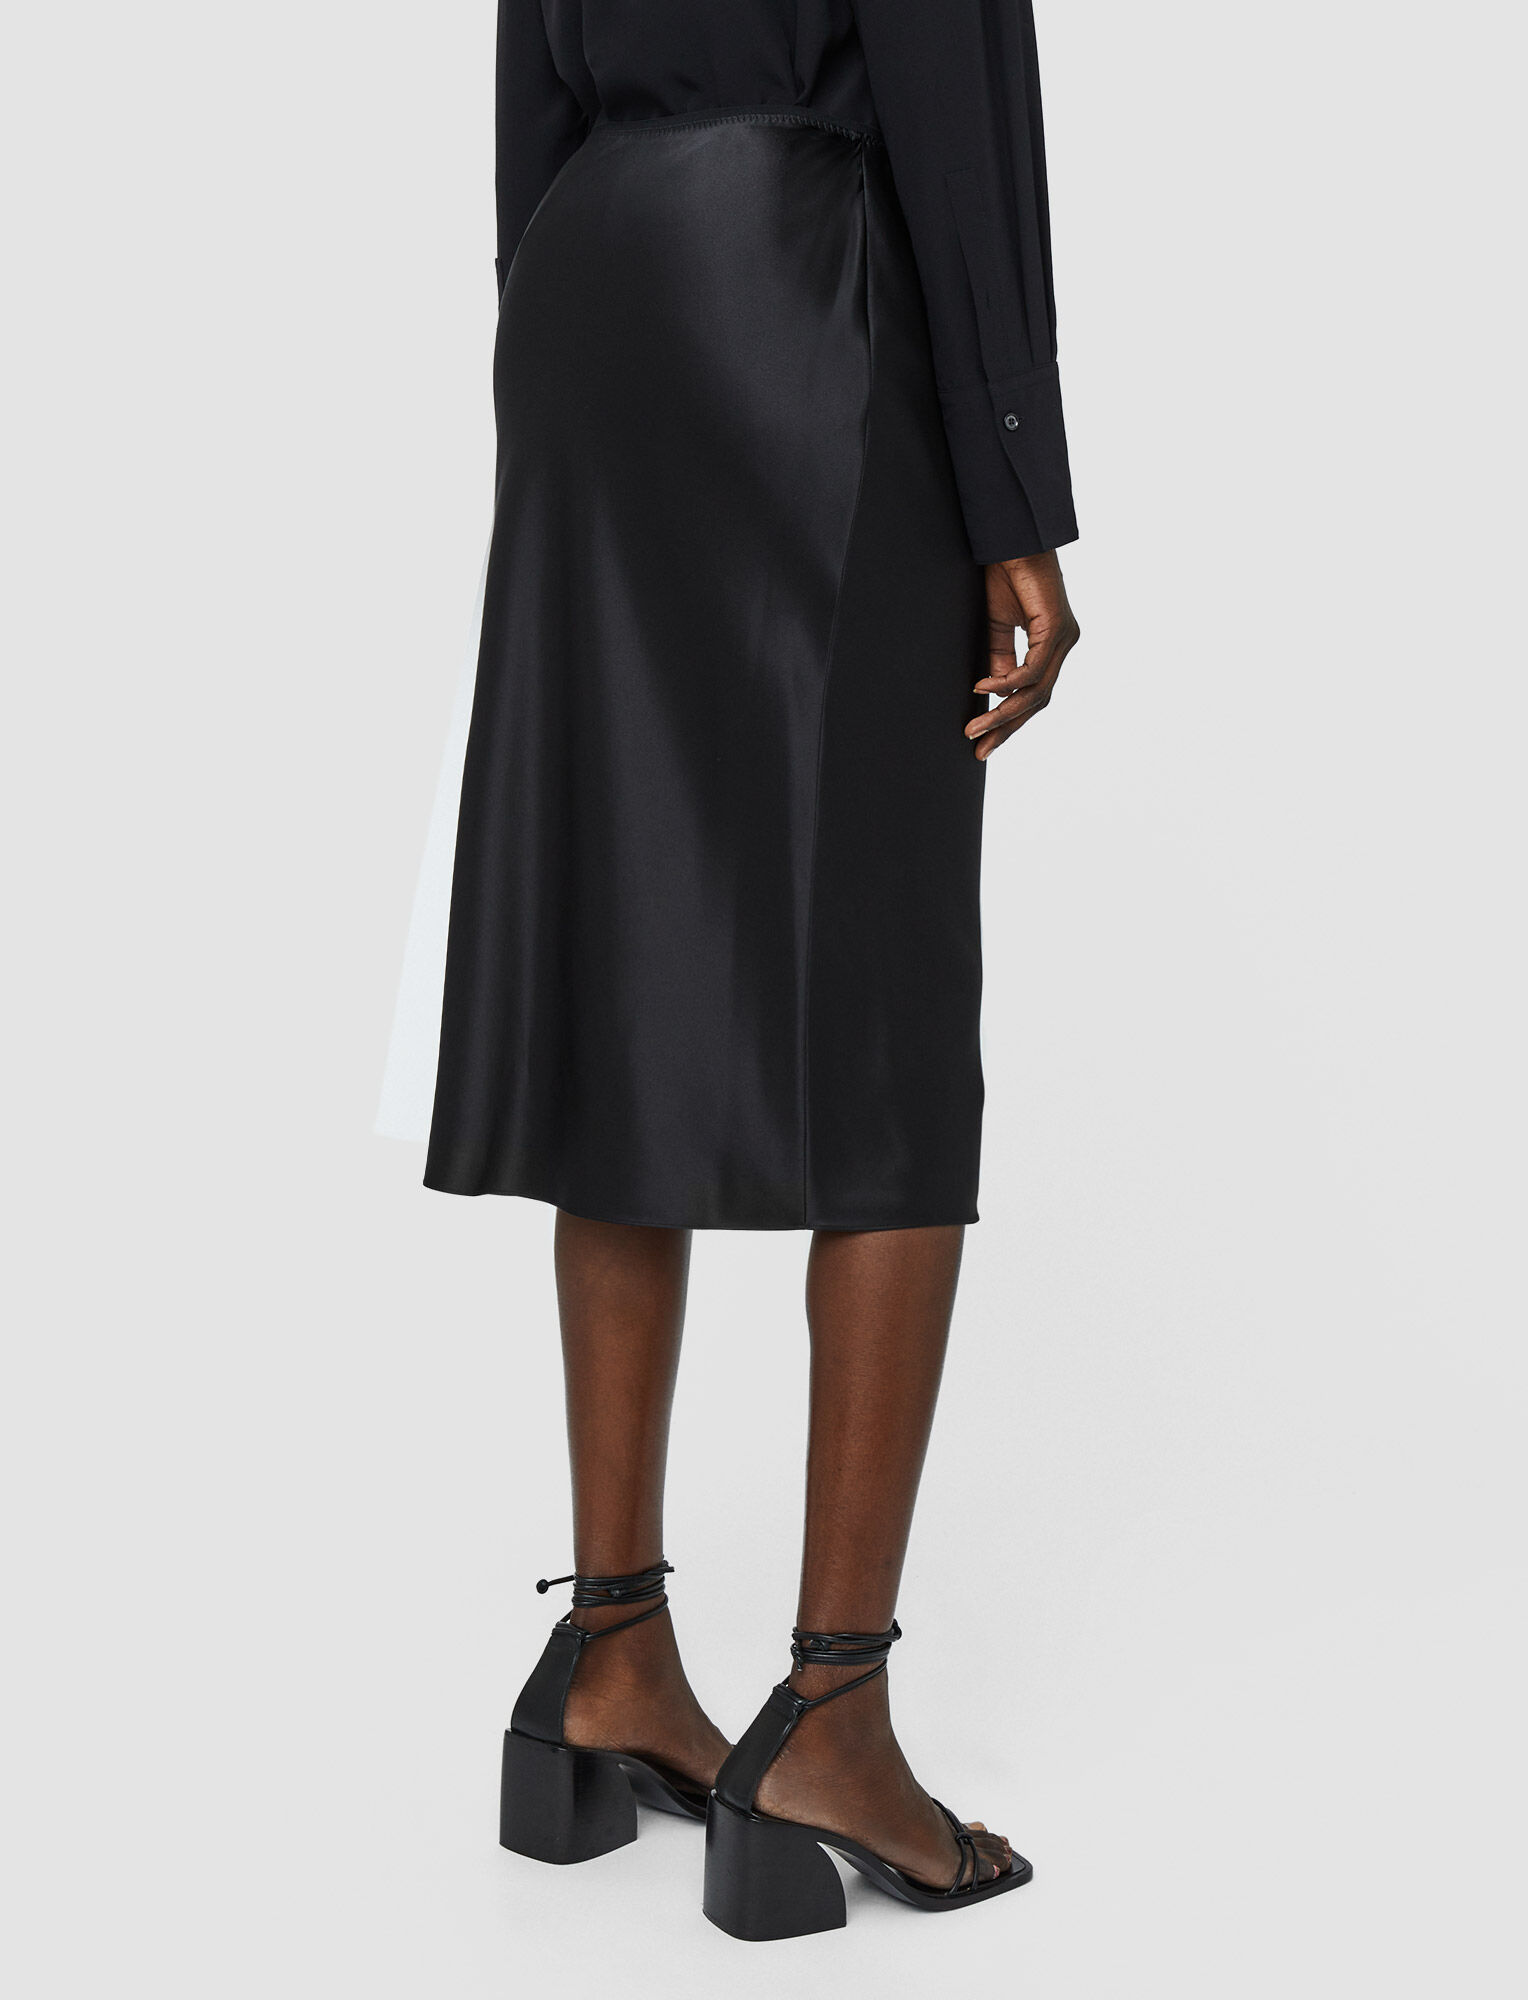 Joseph, Silk Satin Isaak Skirt, in BLACK